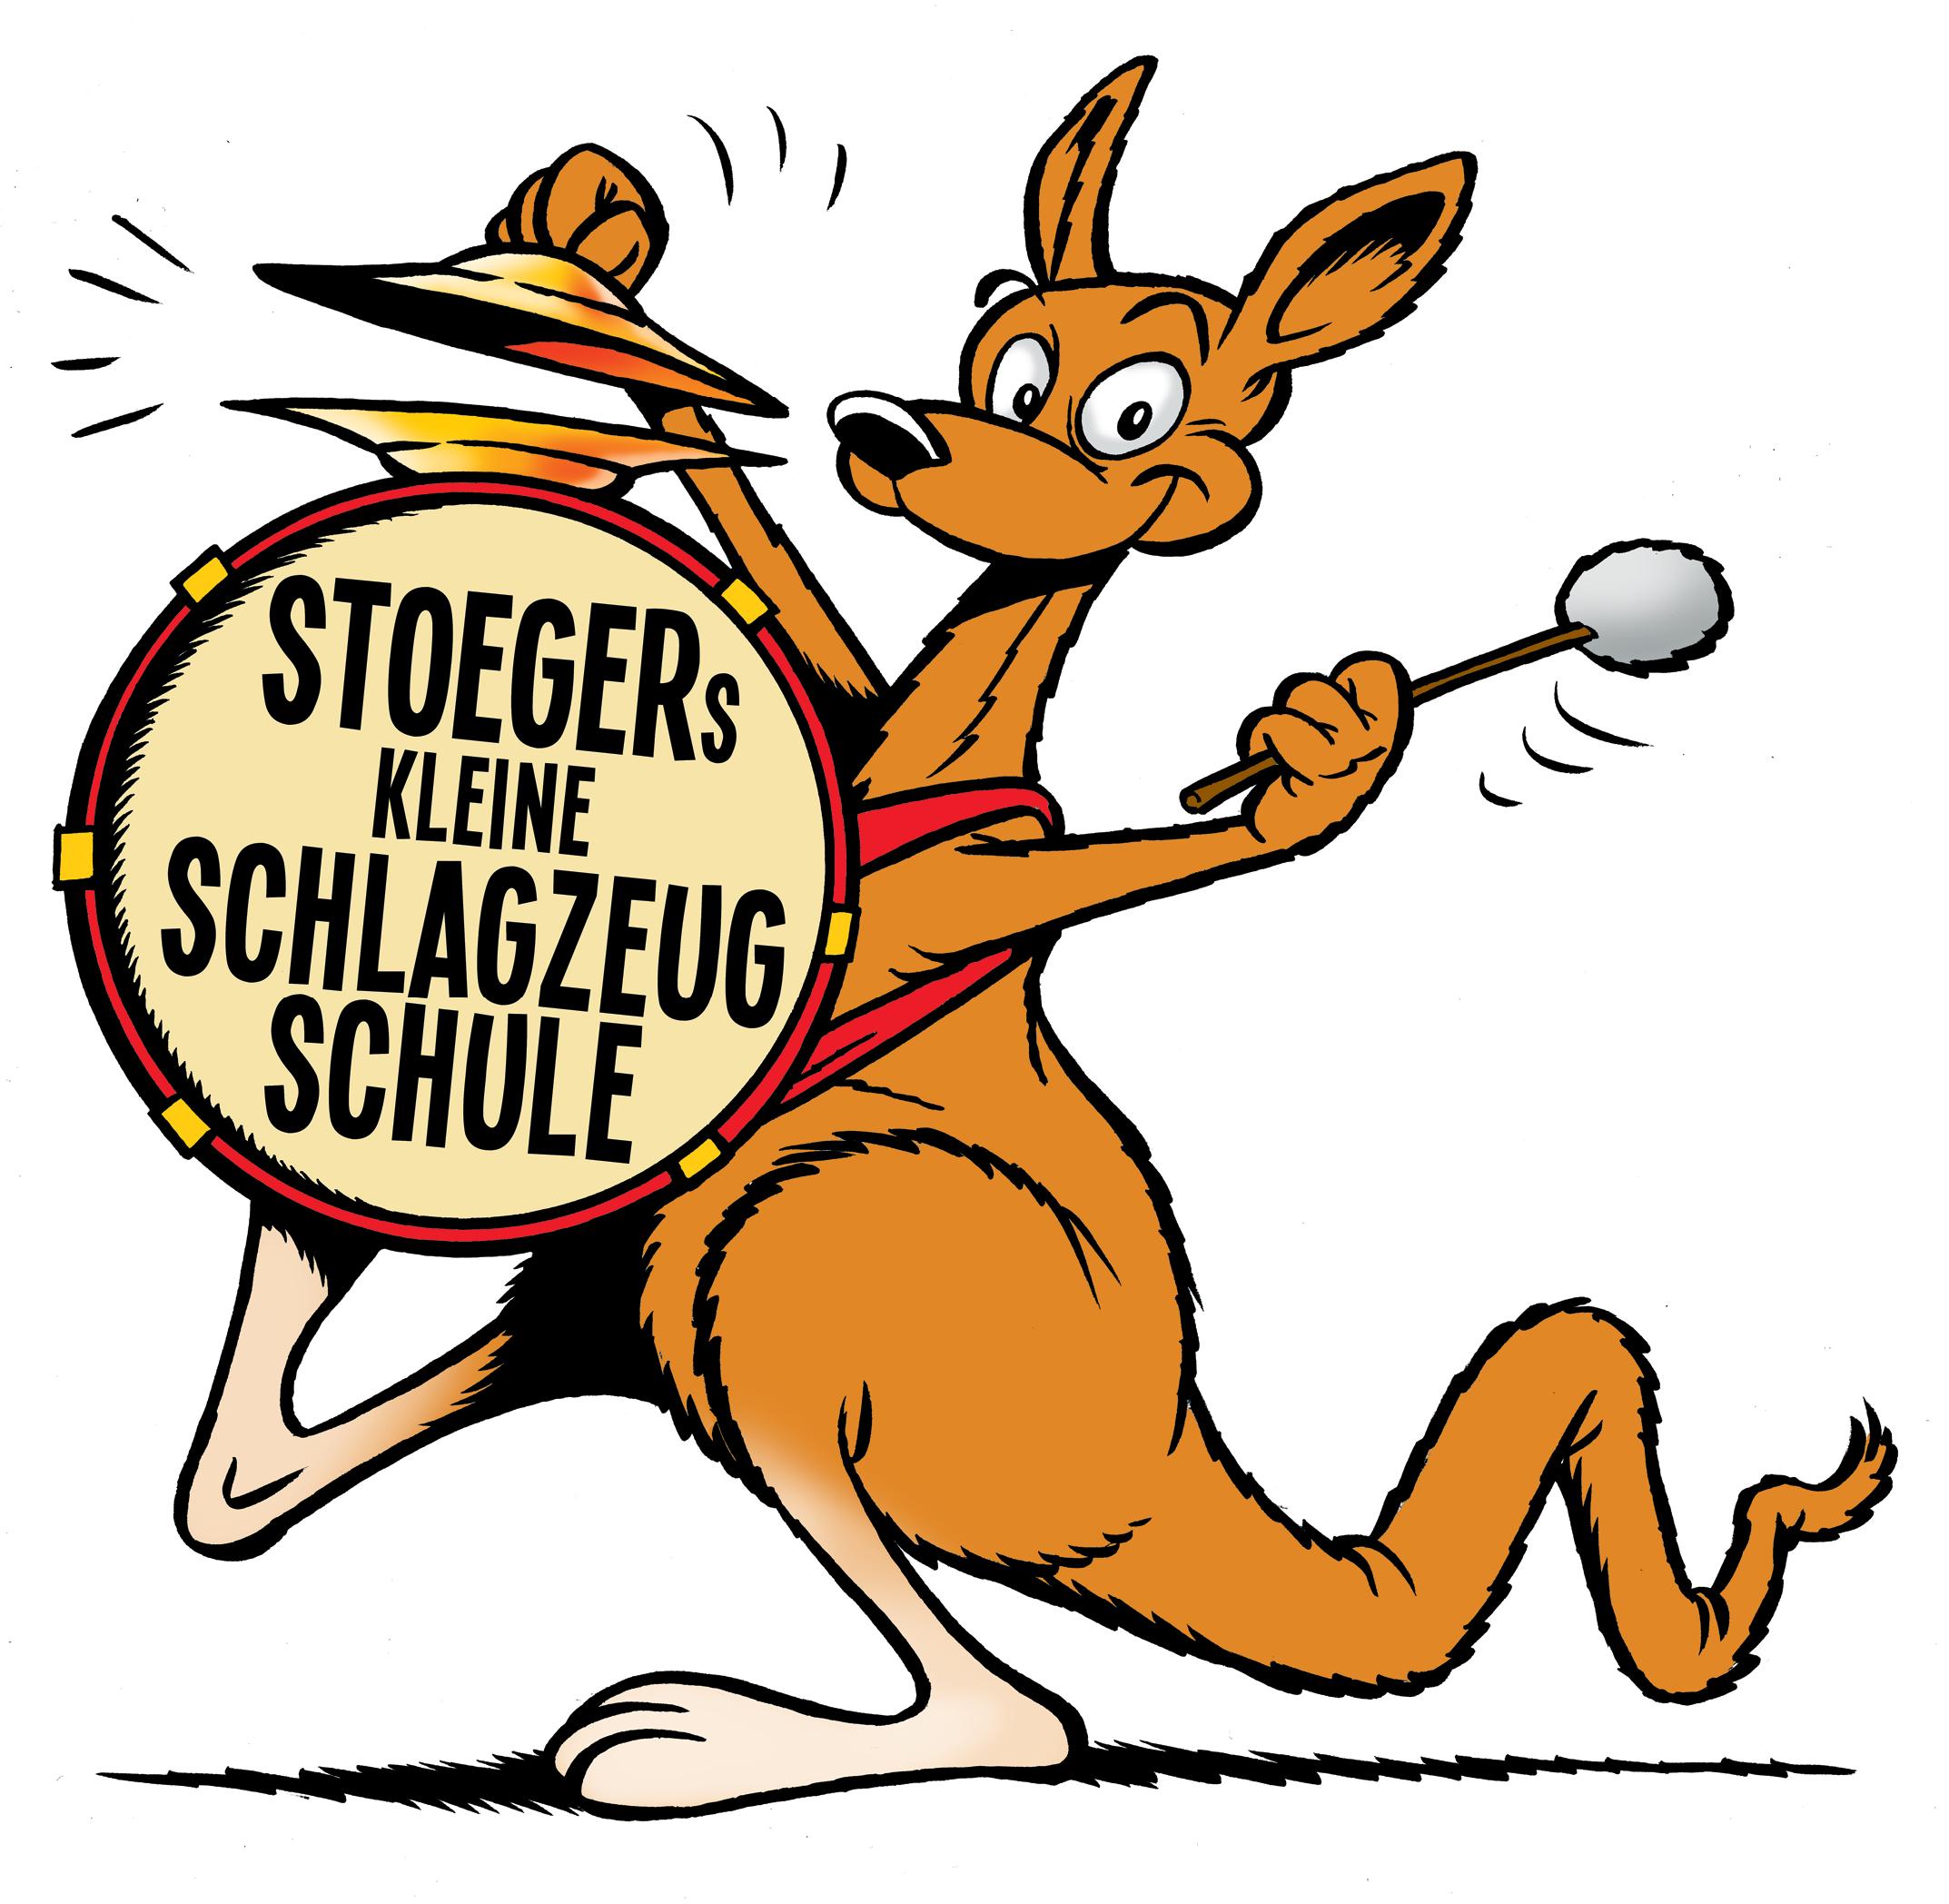 StoegersKleineSchlagzeugschule